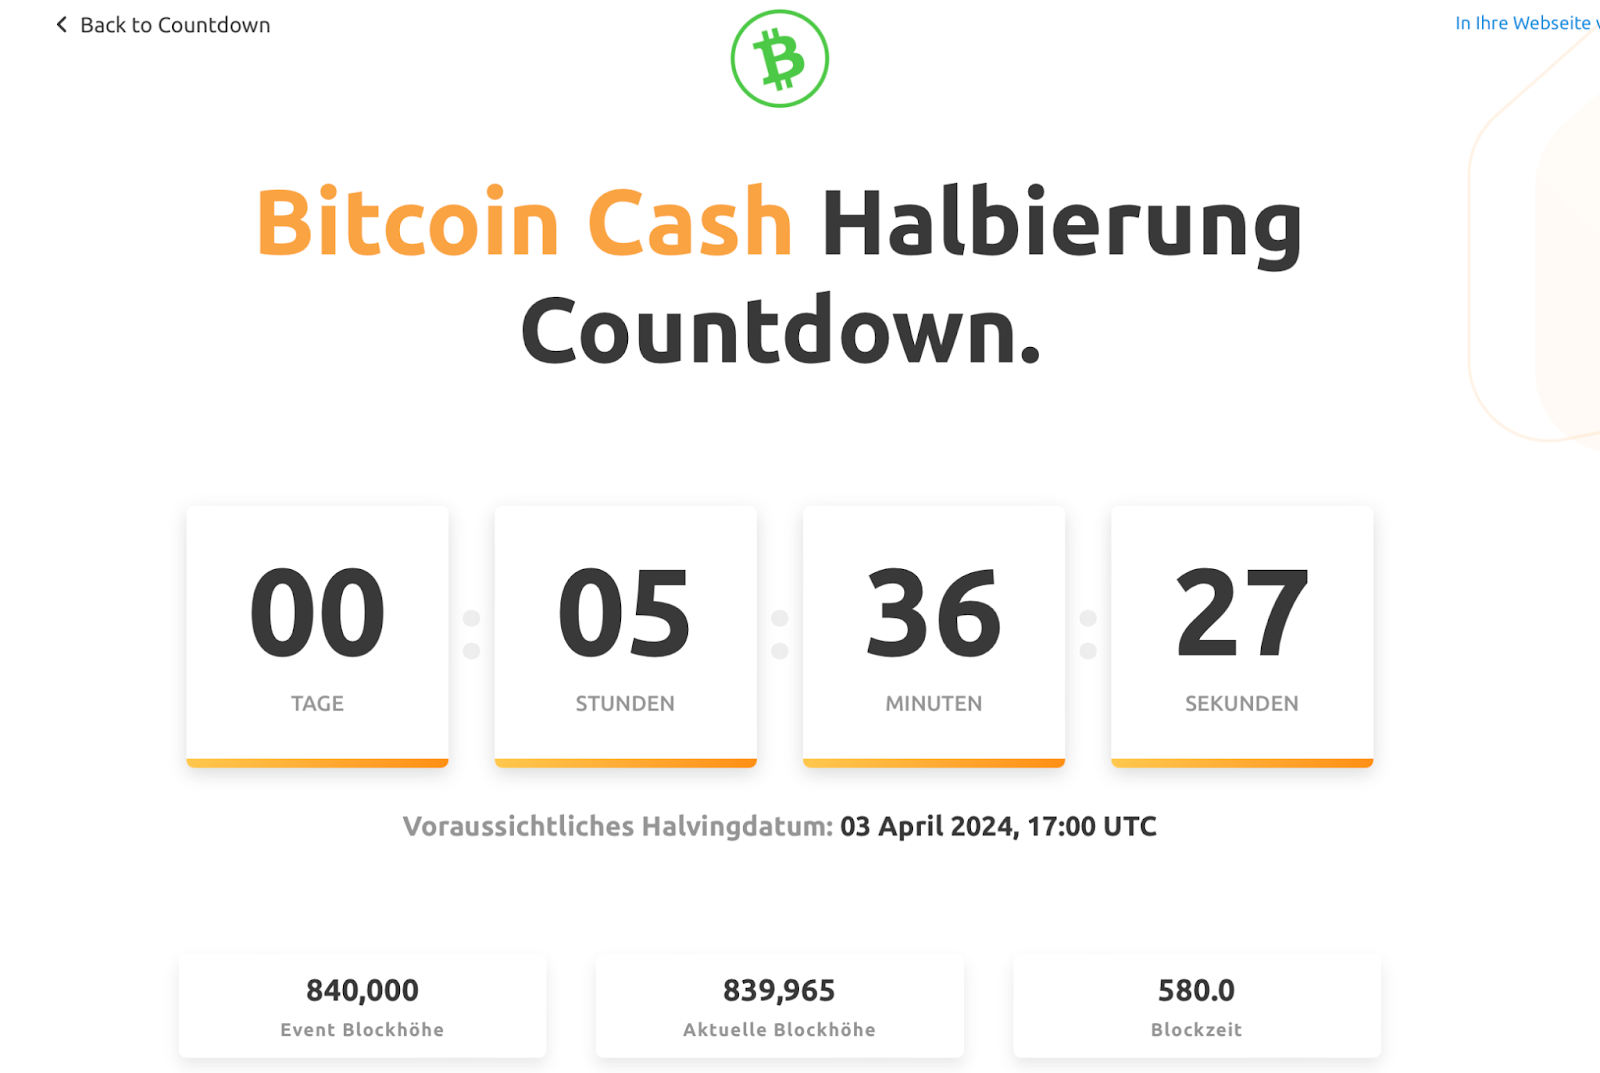 Bitcoin Cash Halving Countdown 